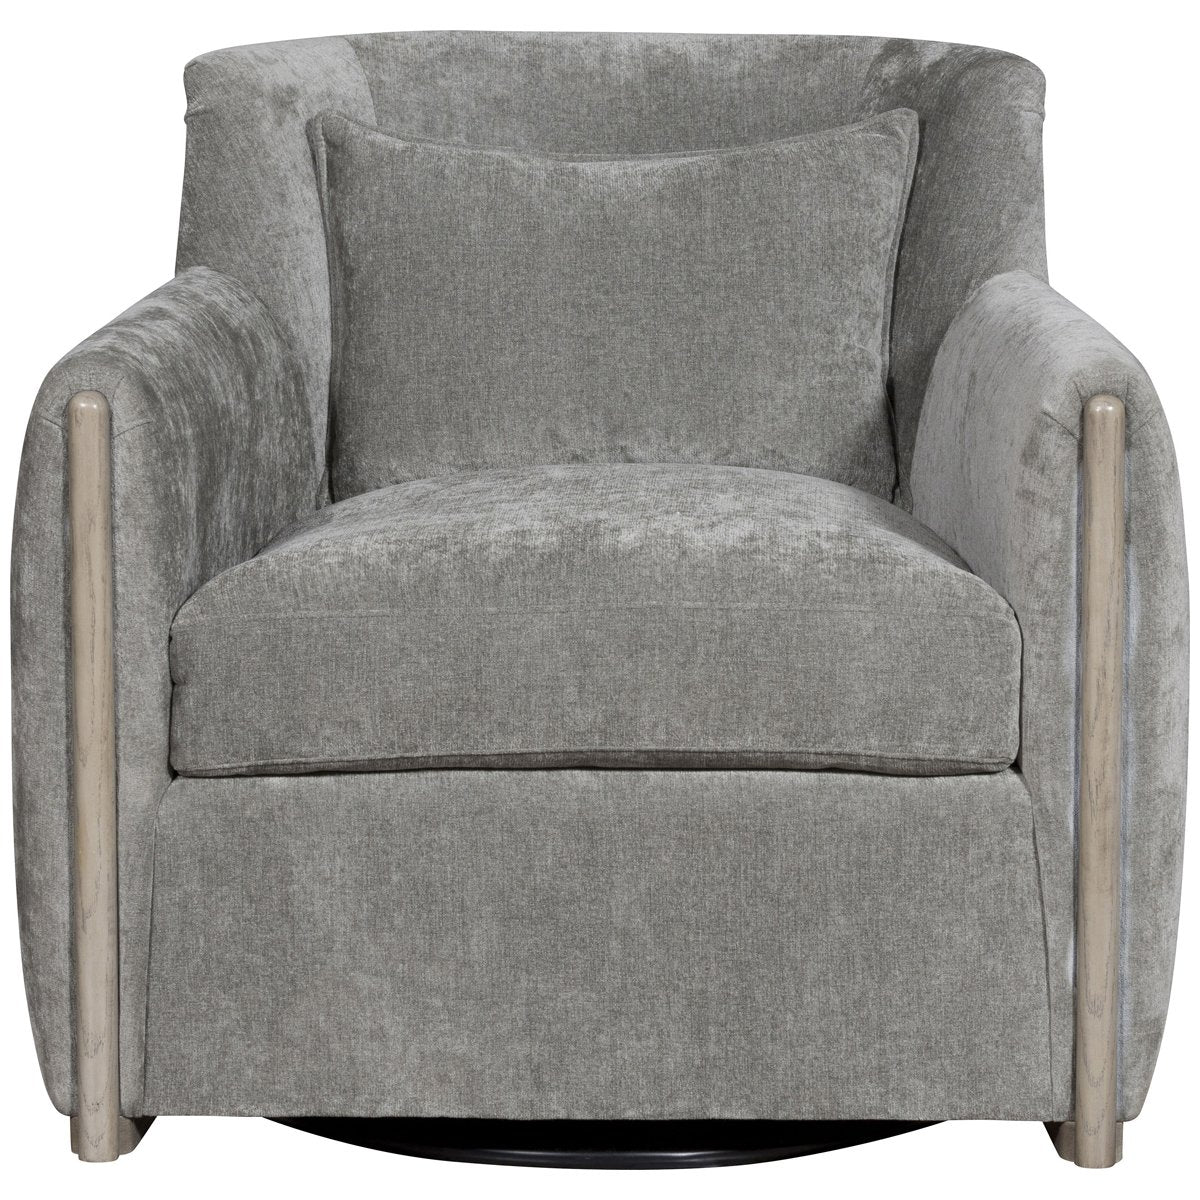 Vanguard Furniture Rowland Swivel Chair